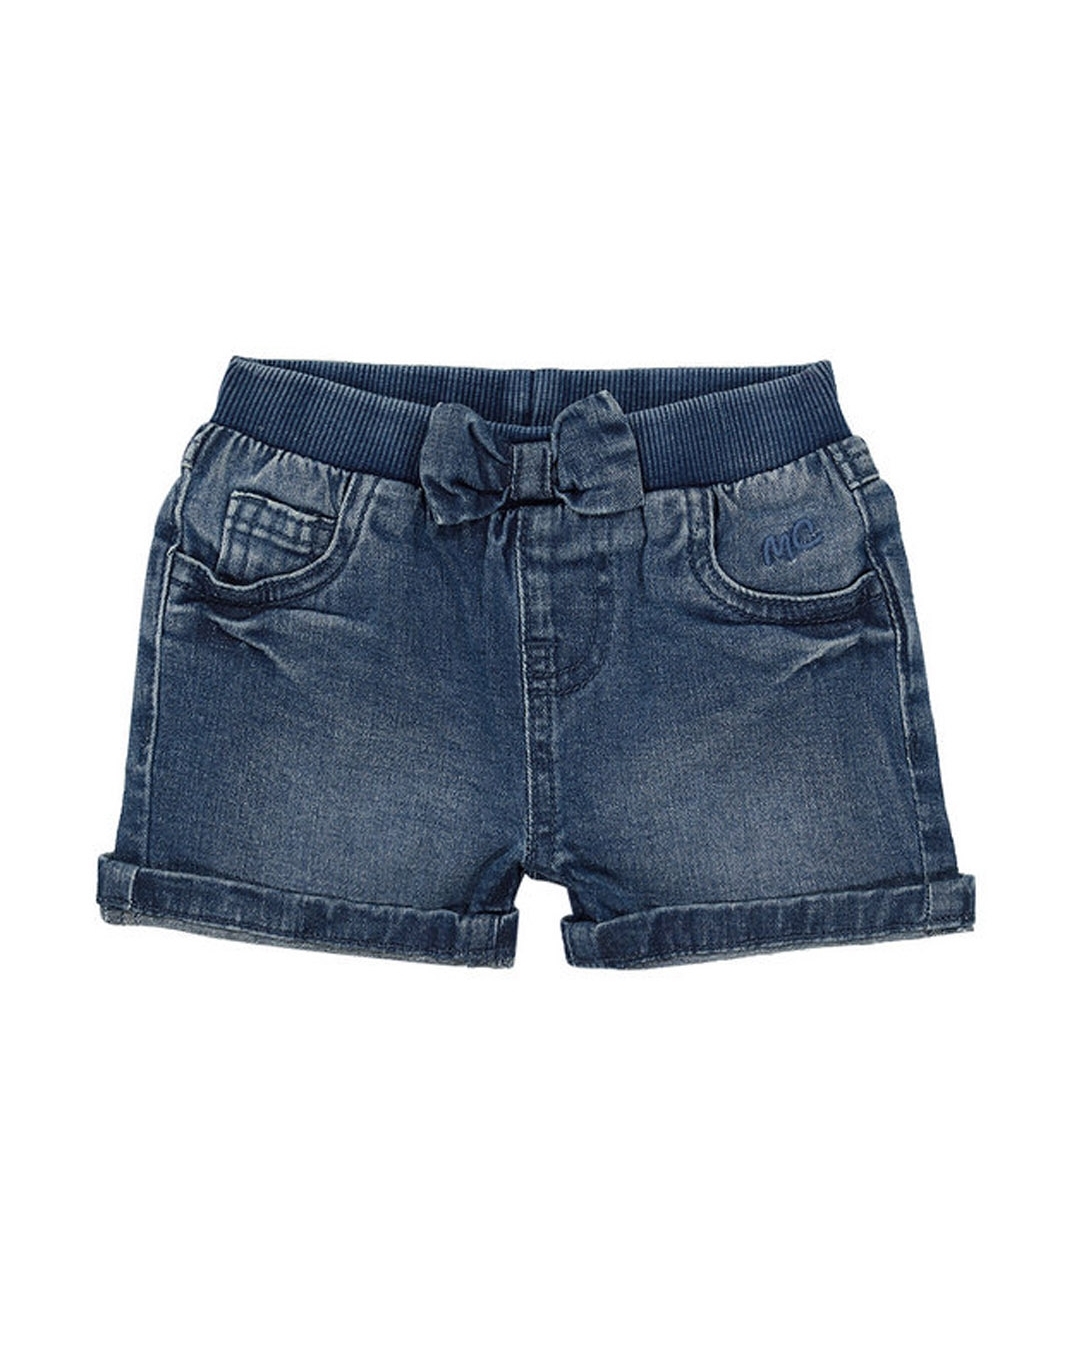 Buy Girls Shorts-Washed Denim Online at Best Price